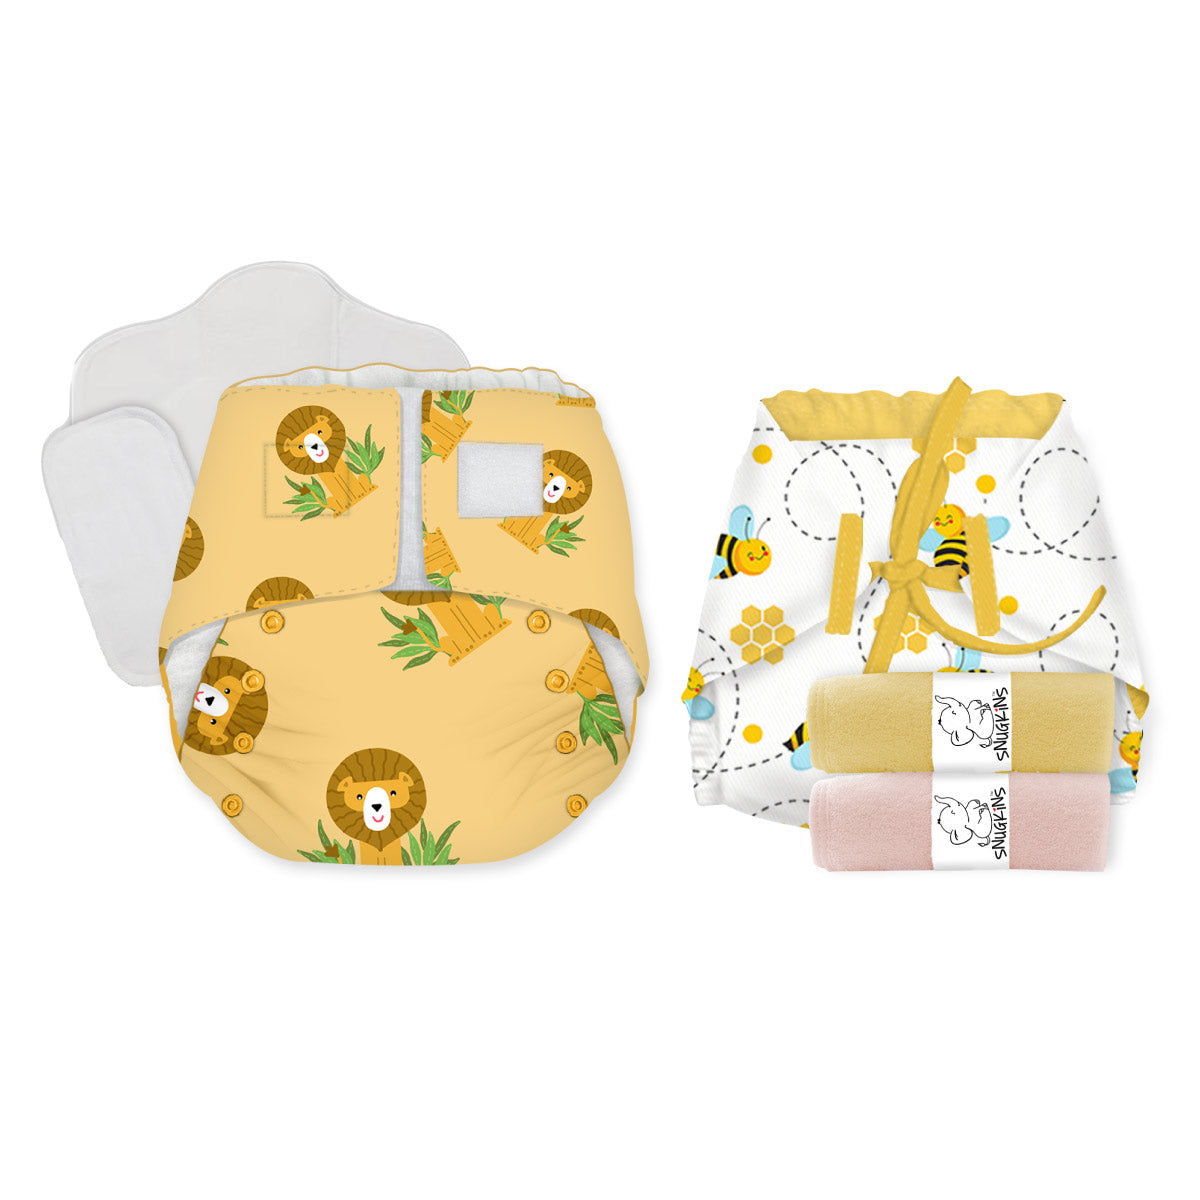 Snugkins Newborn Baby Gift Set - Set of 6